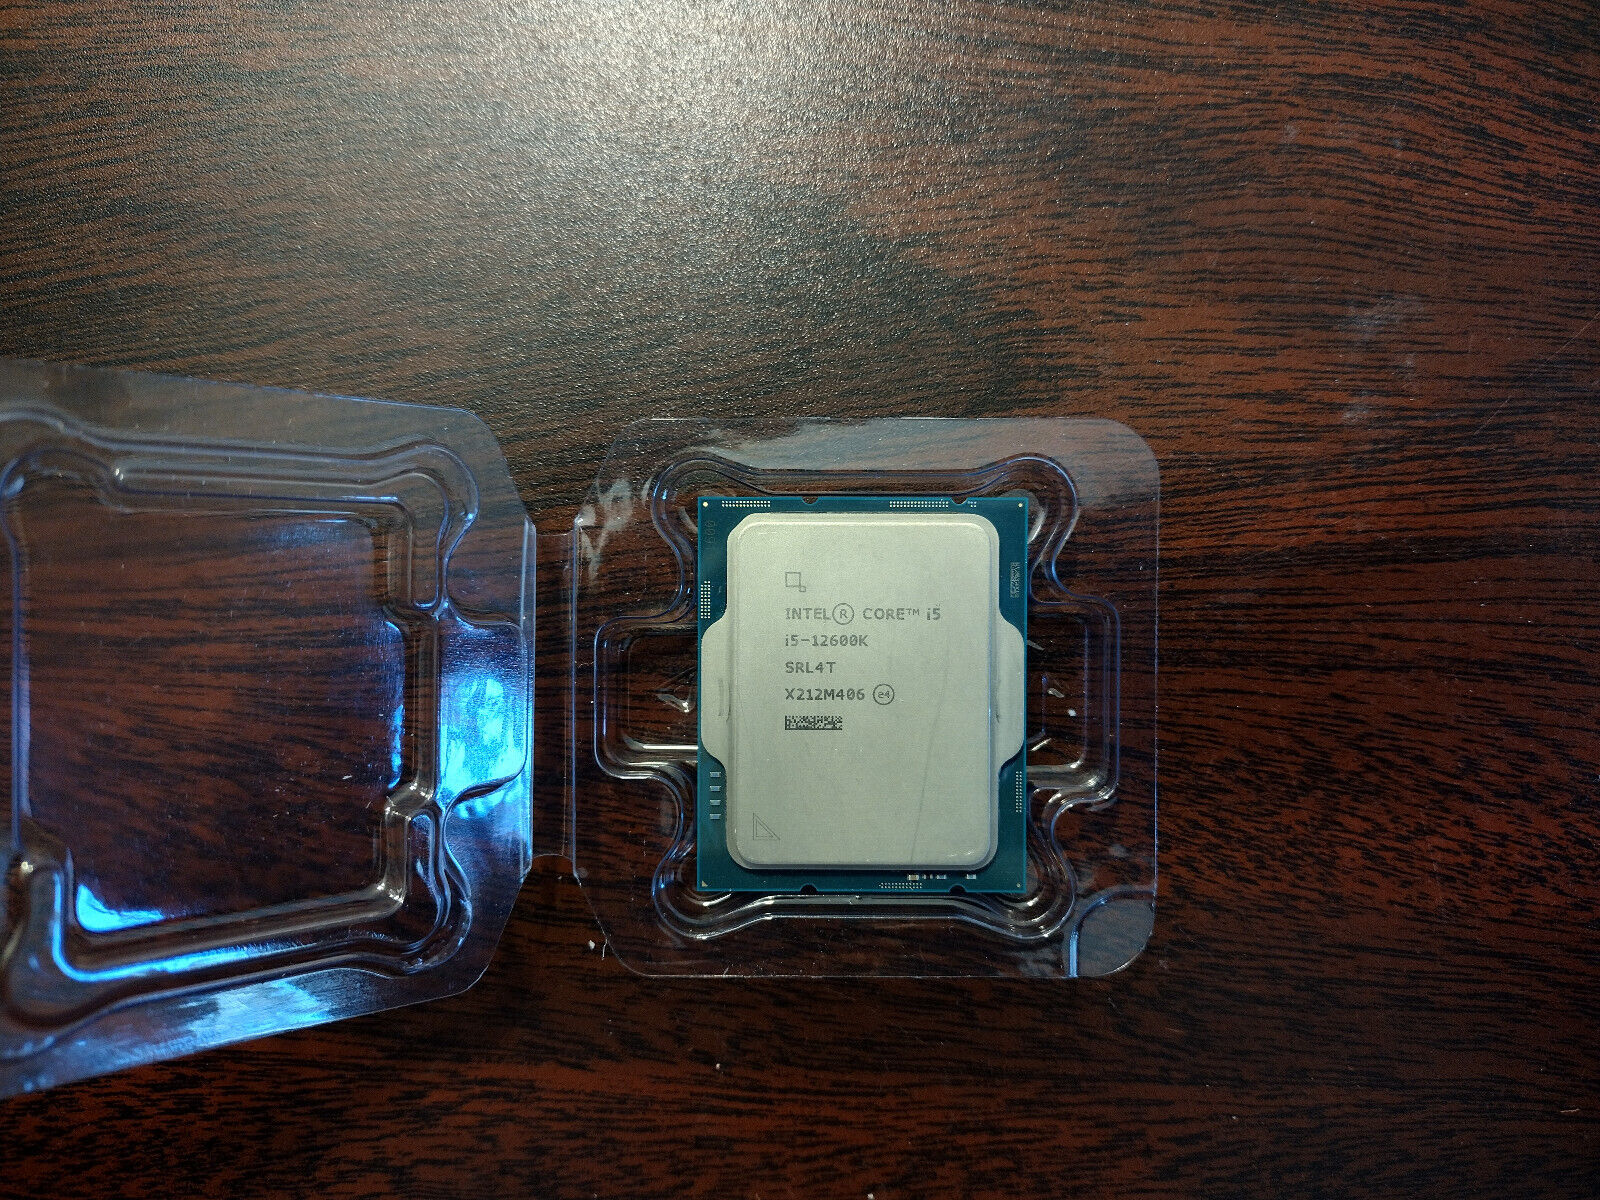 Intel Core i5-12600K SRL4T 3.7-4.9GHz 10core (6P+4E) Desktop Processor CPU